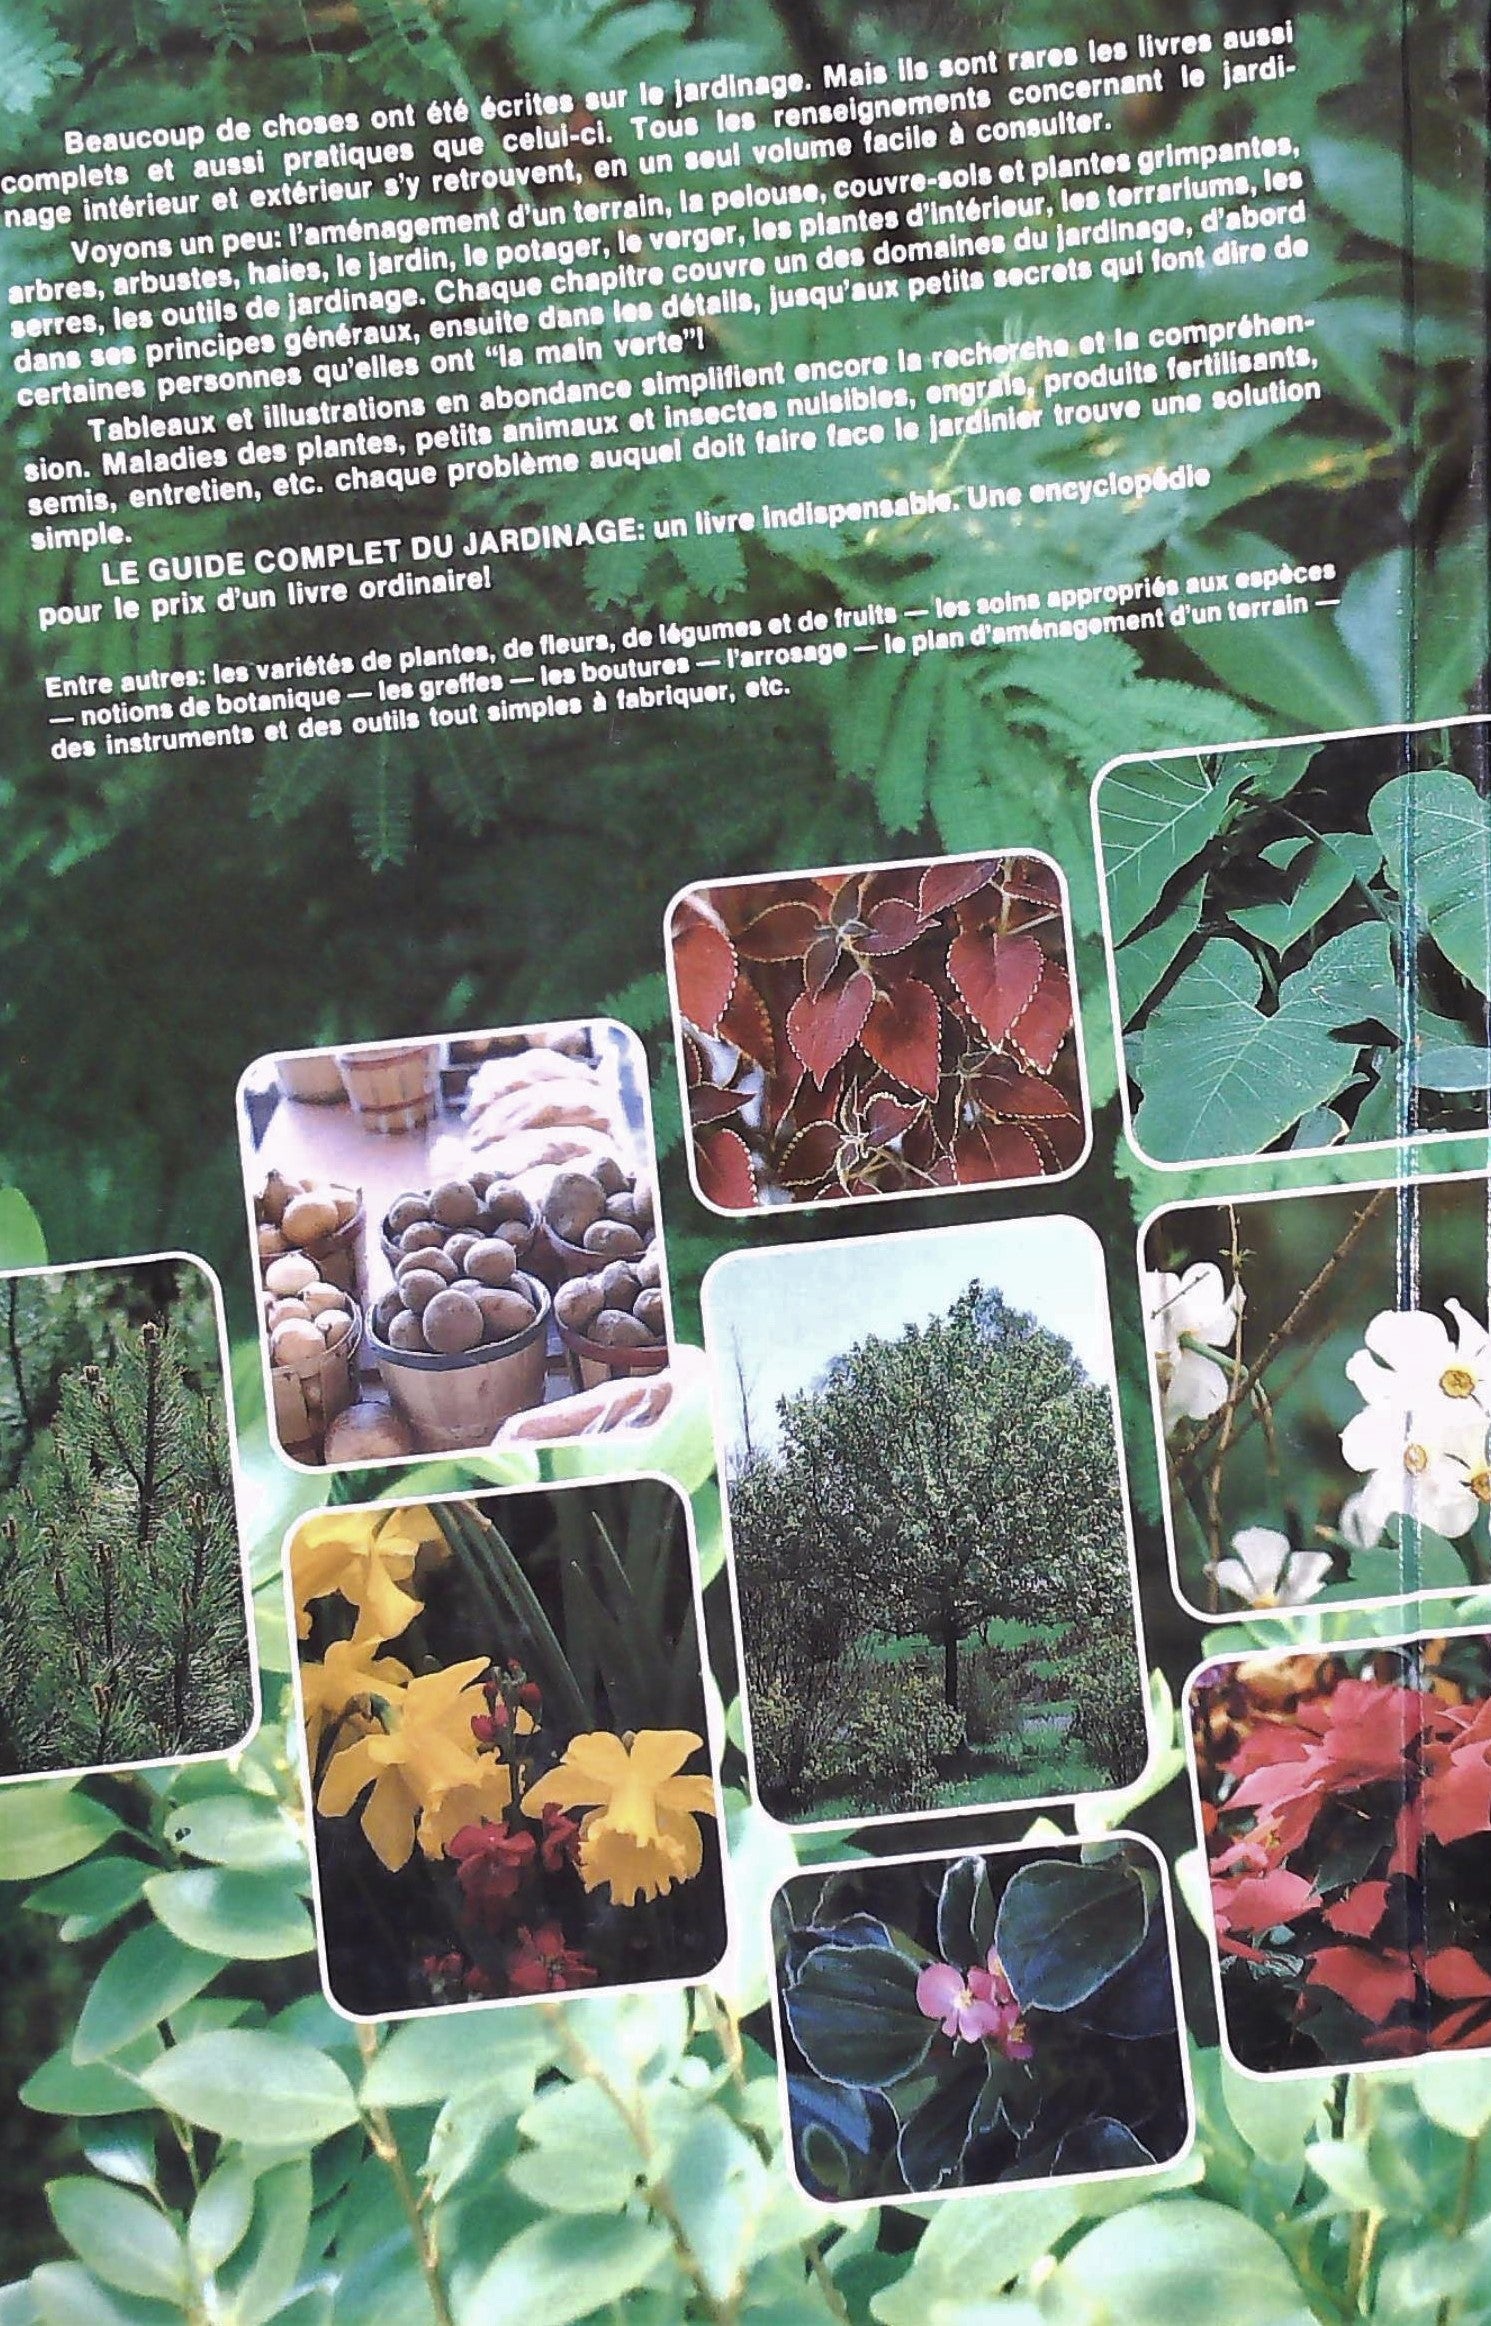 Le guide complet du jardinage (Charles L. Wilson)